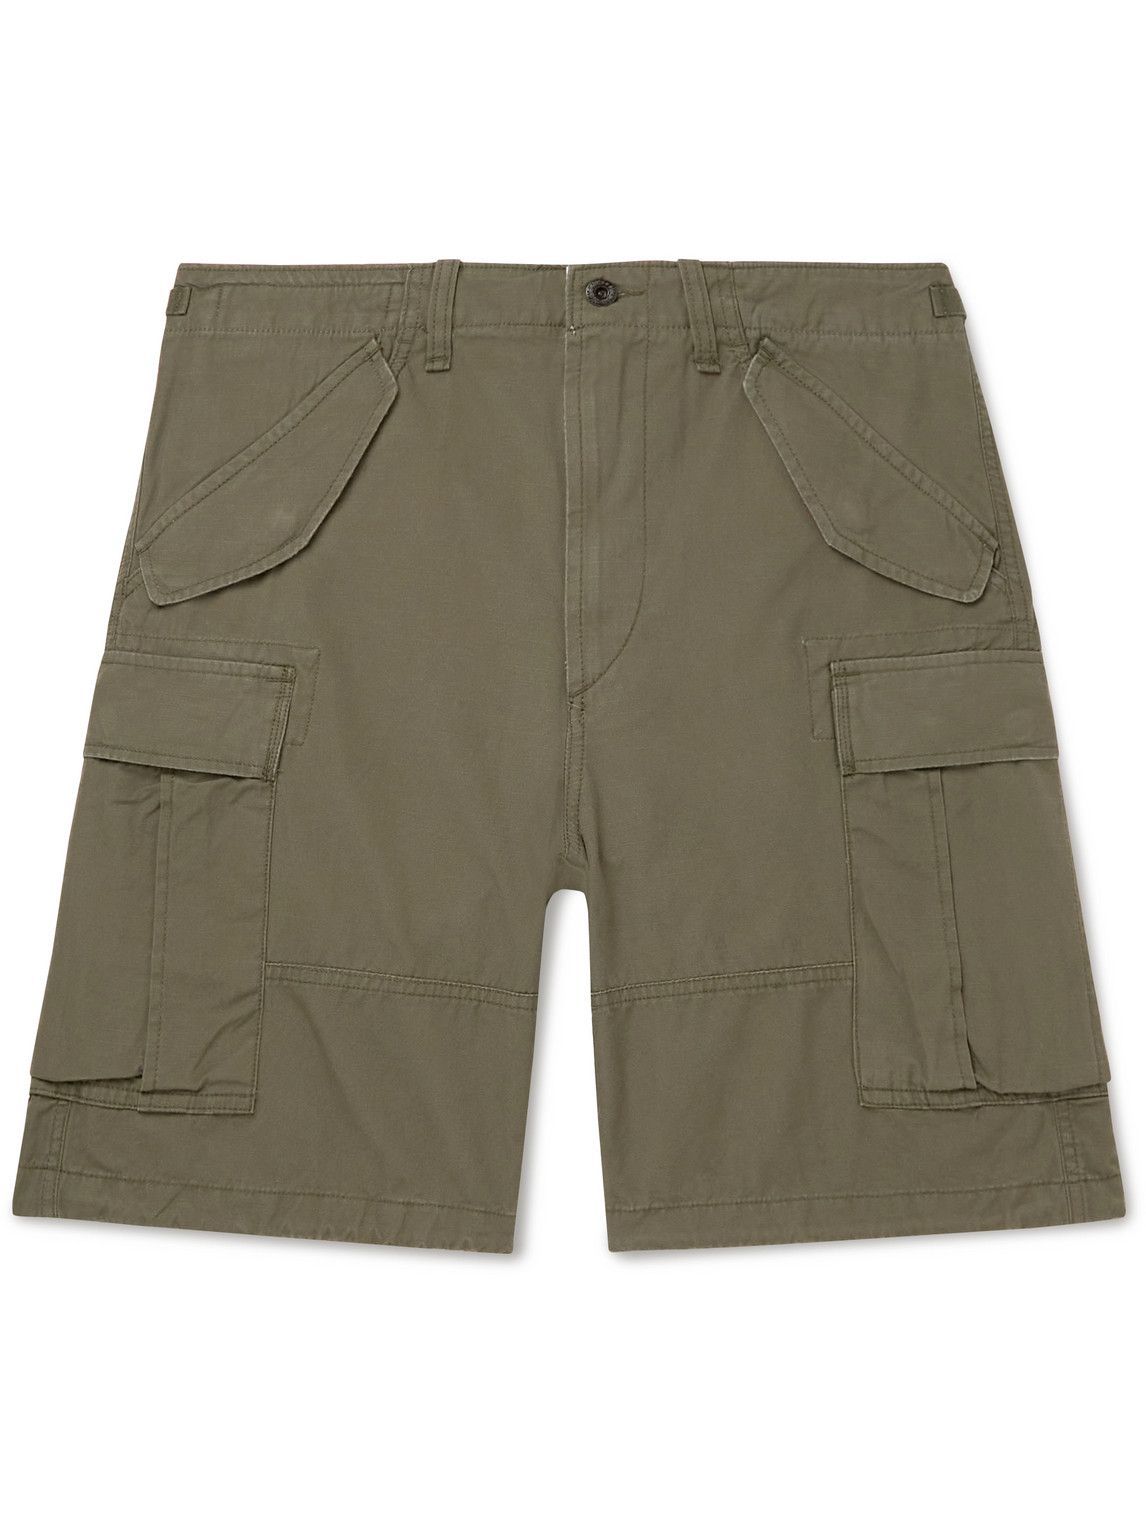 Polo Ralph Lauren - Straight-Leg Cotton-Ripstop Cargo Shorts - Green